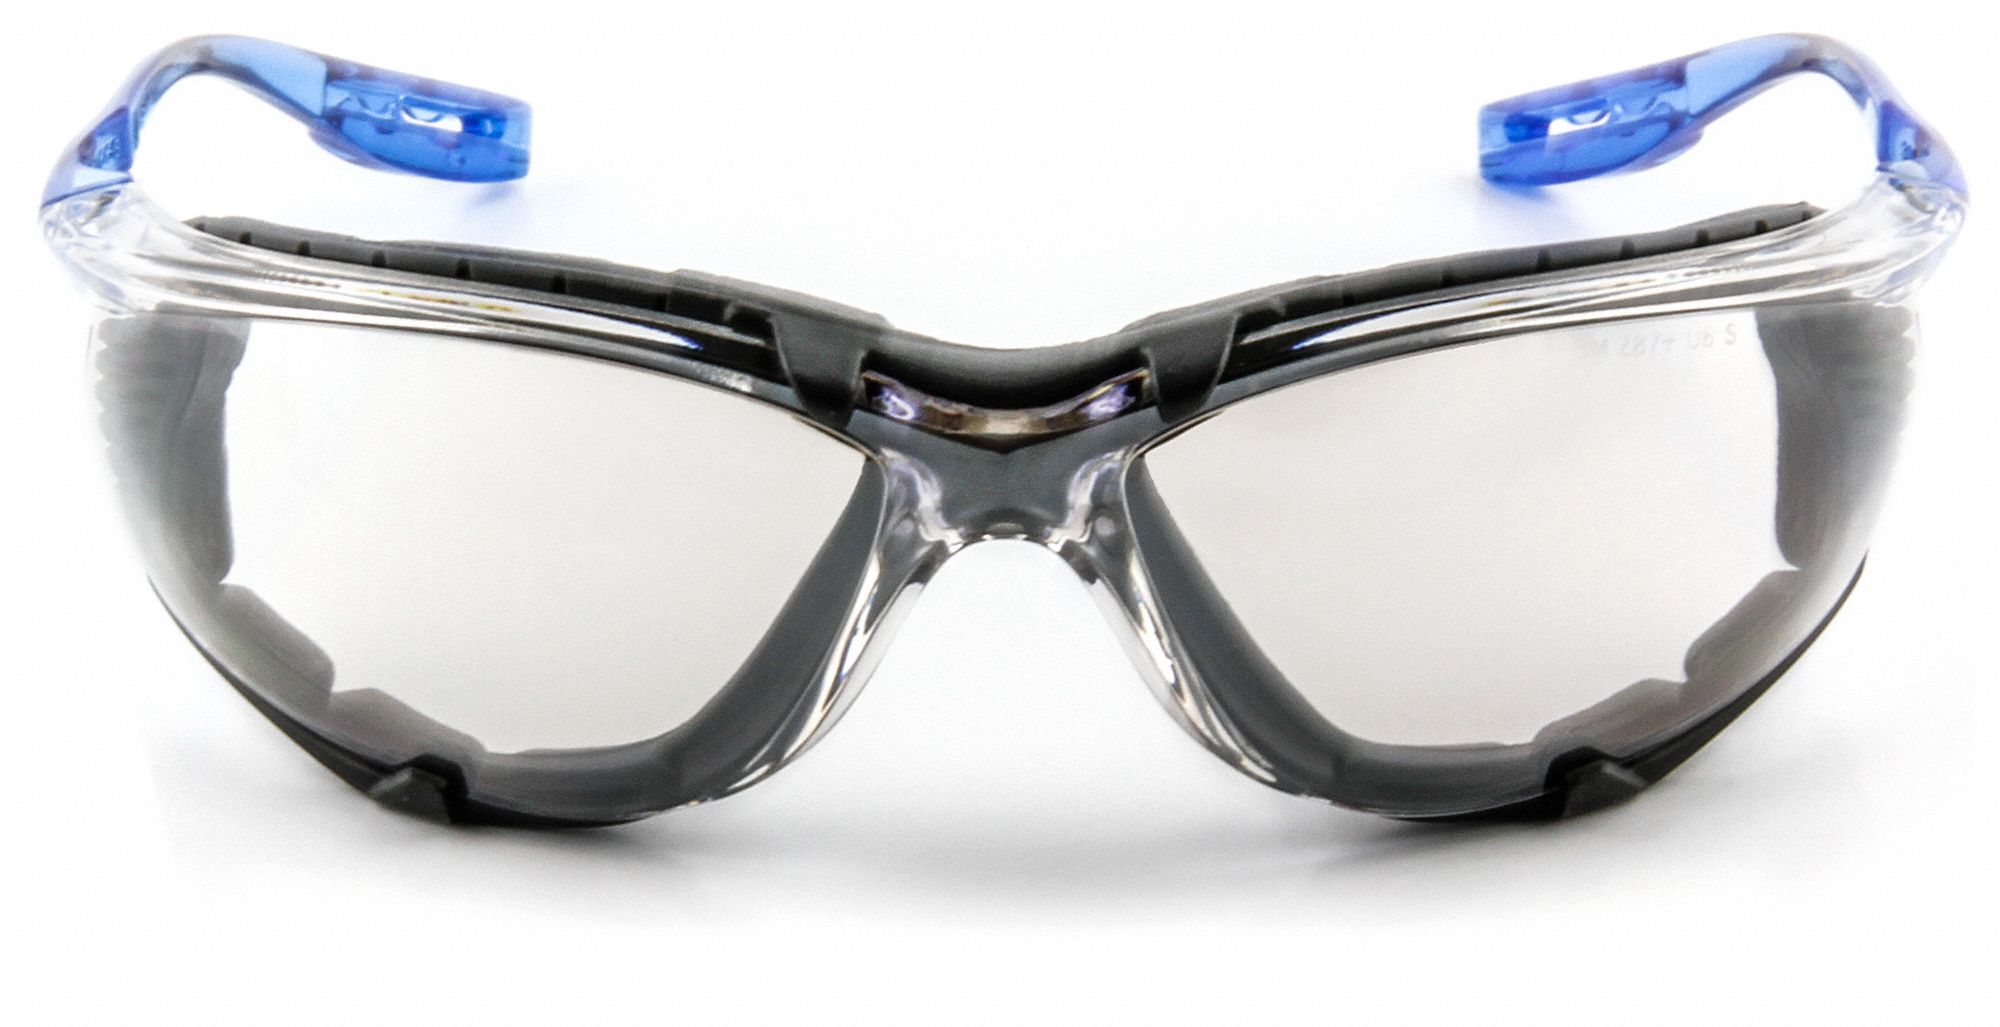 3m Virtua™ Ccs Anti Fog Safety Glasses Indoor Outdoor Mirror Lens Color 46f392 11874 00000